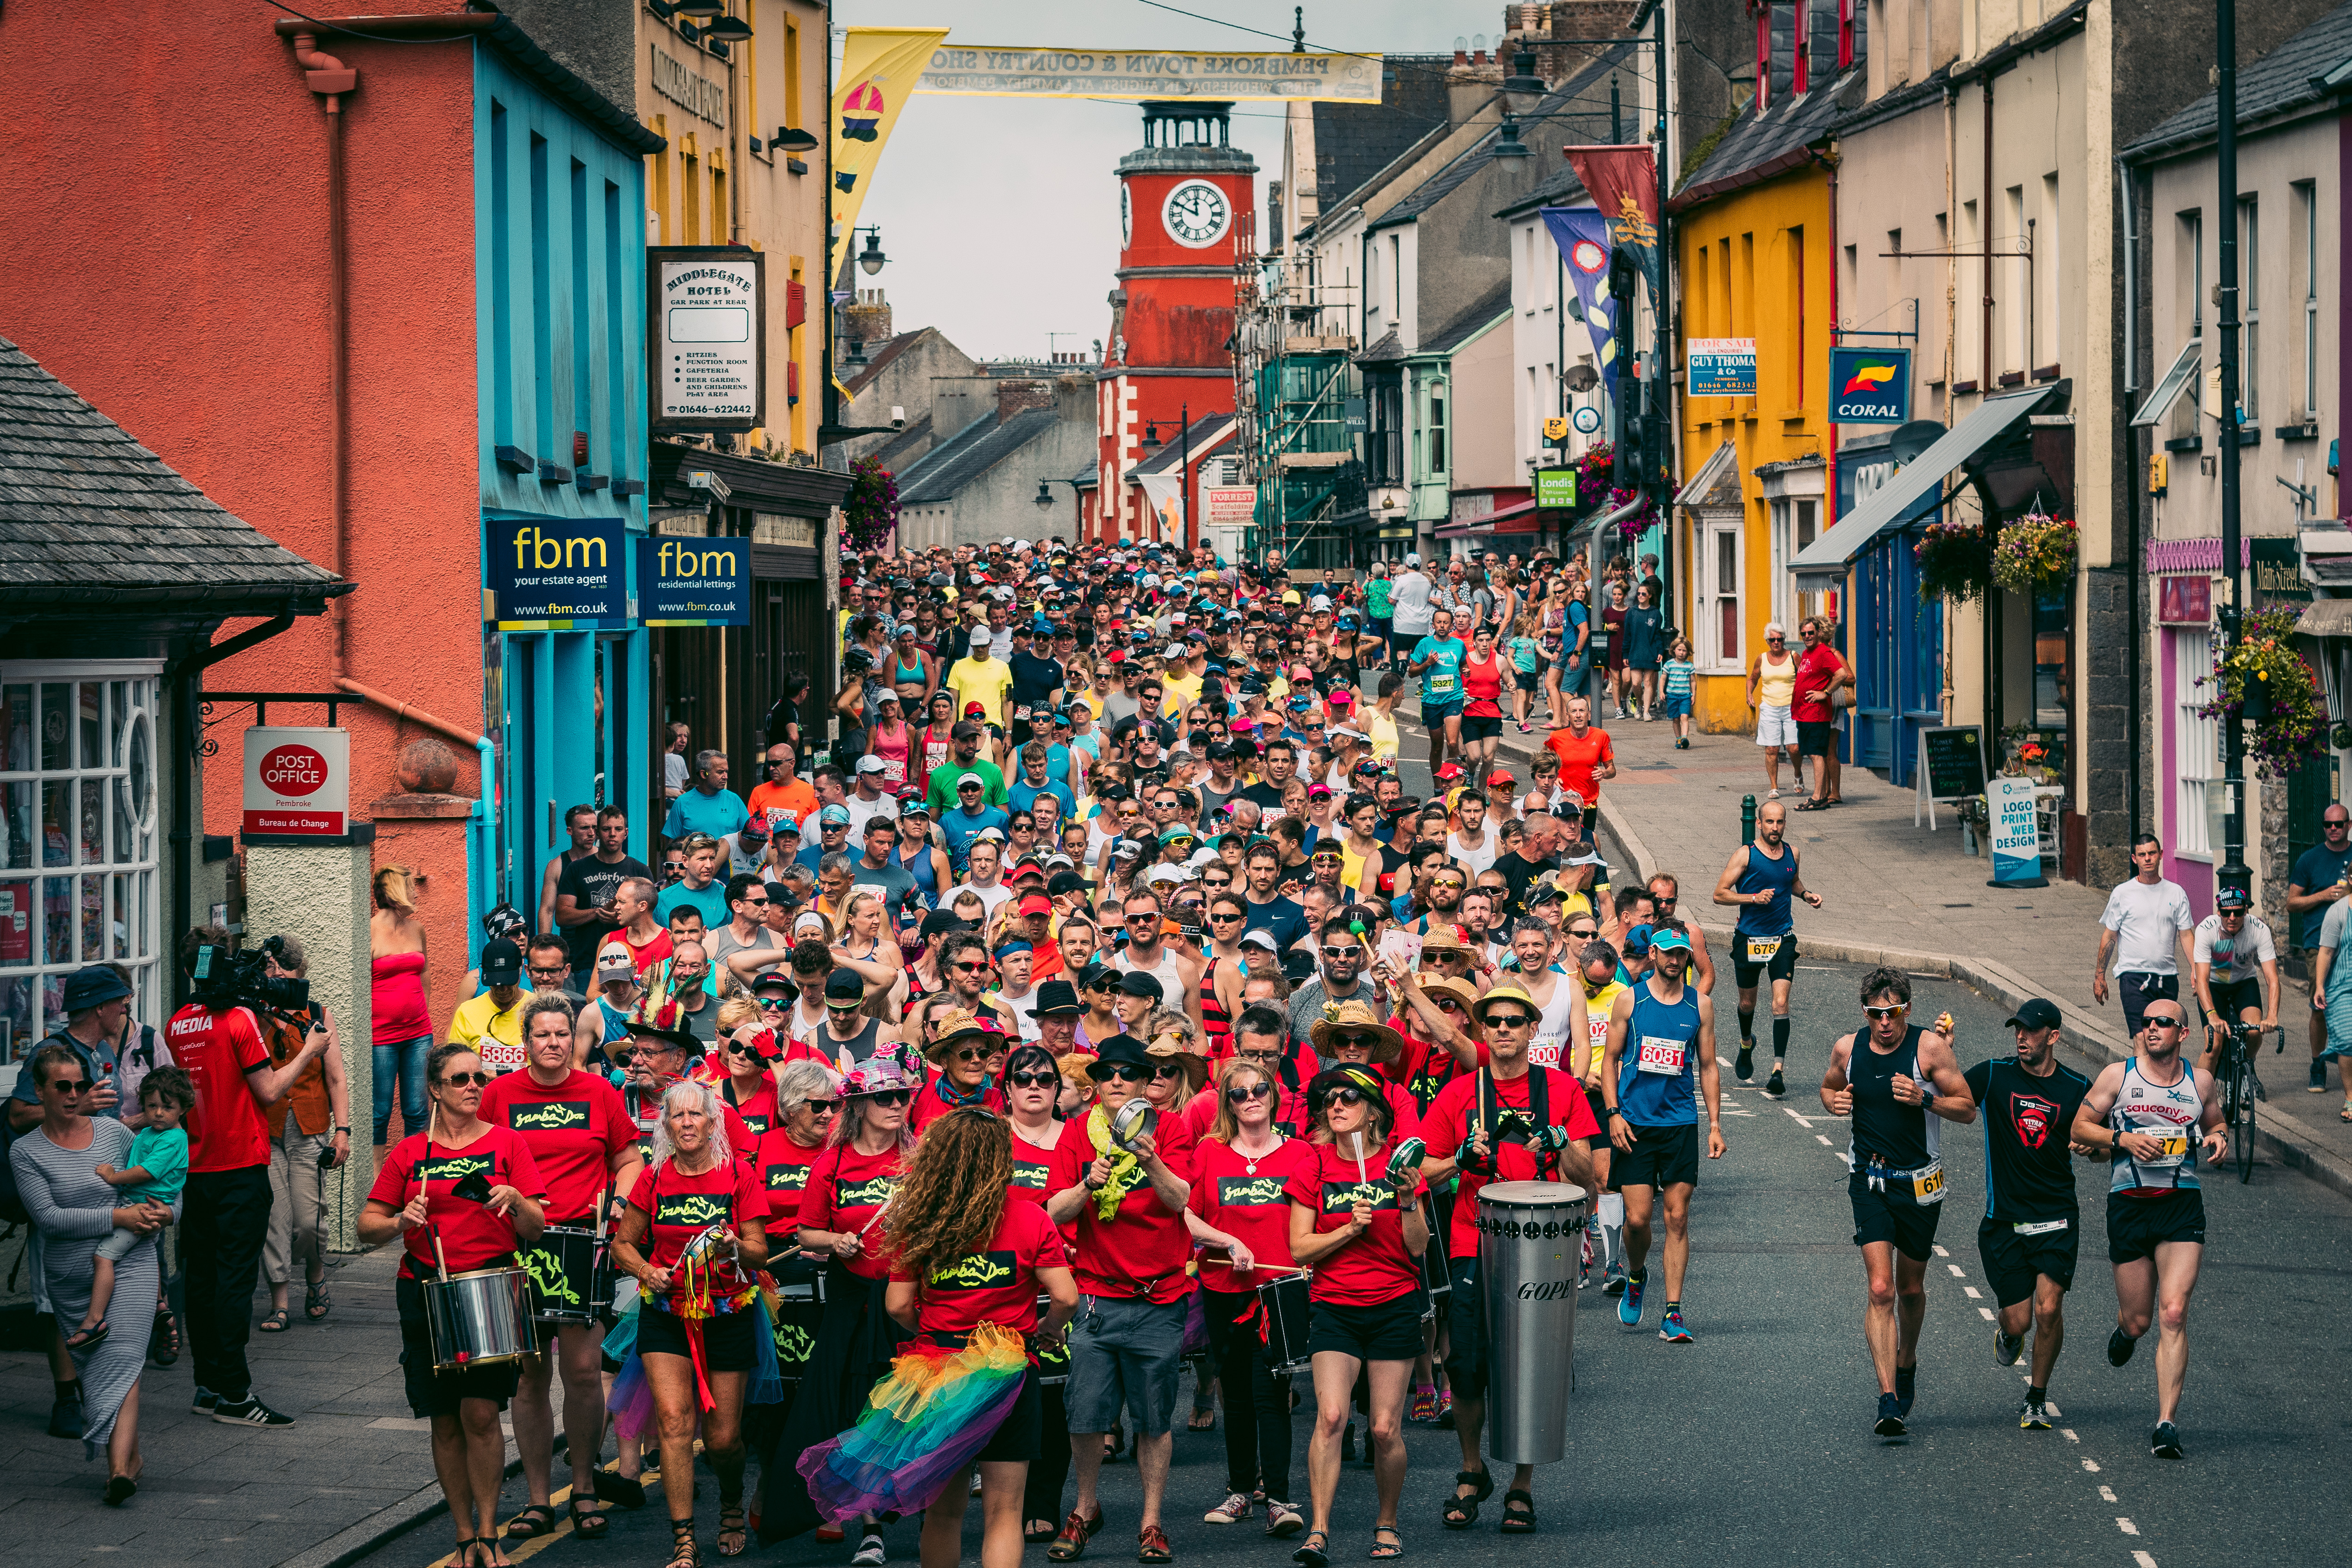 The Wales Marathon and Half Marathon